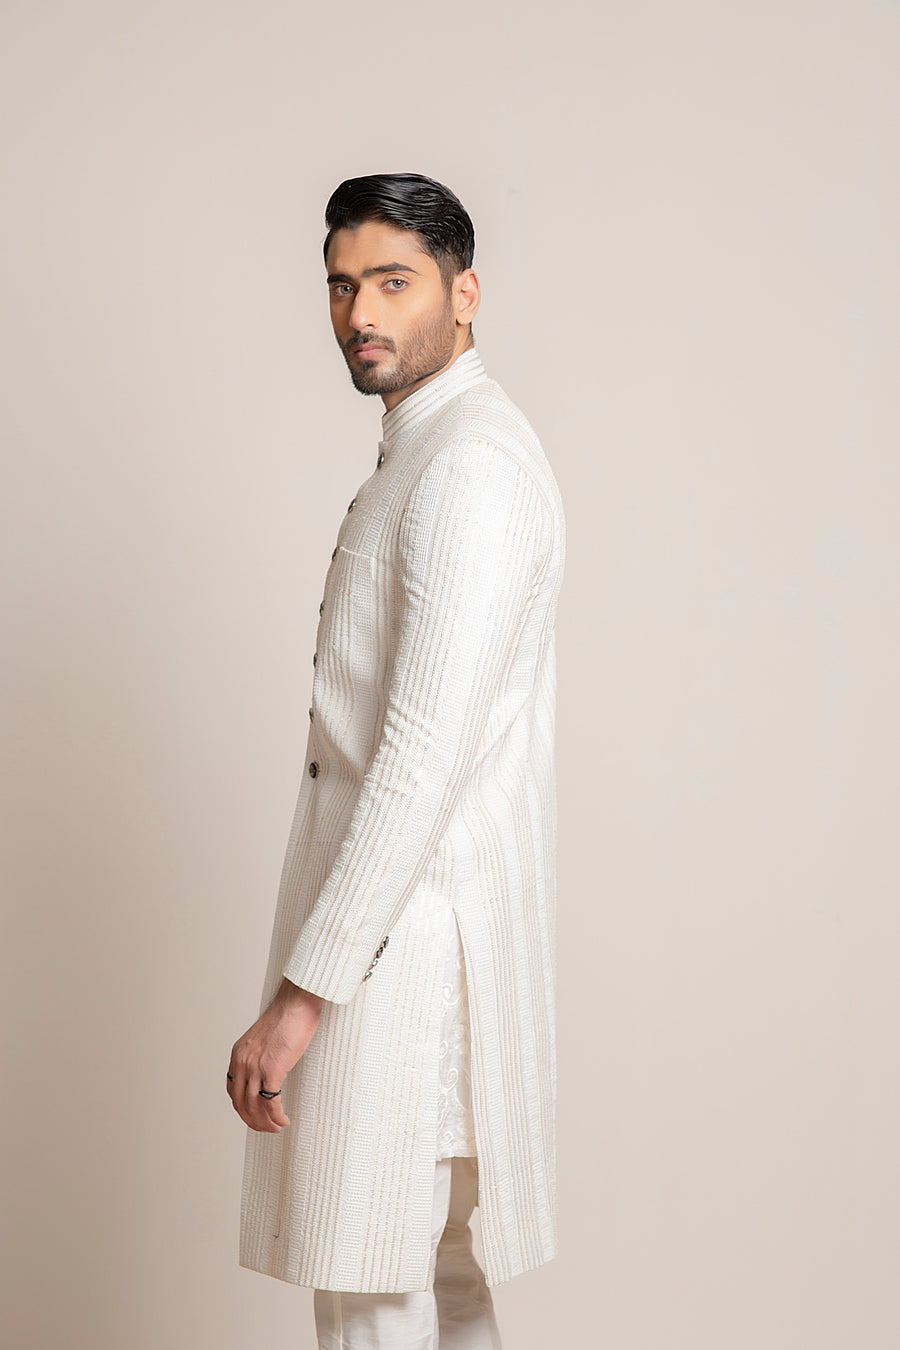 White embroidered (sequins) Sherwani